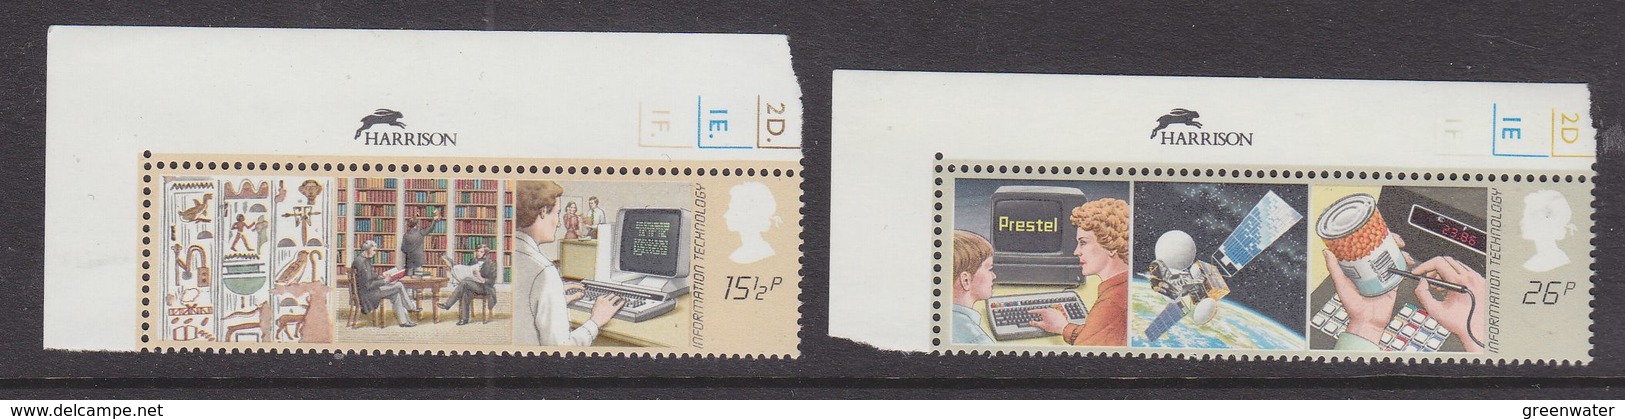 Great Britain 1982 Information Technology 2v (corners "Harrison") ** Mnh (39920A) - Ongebruikt